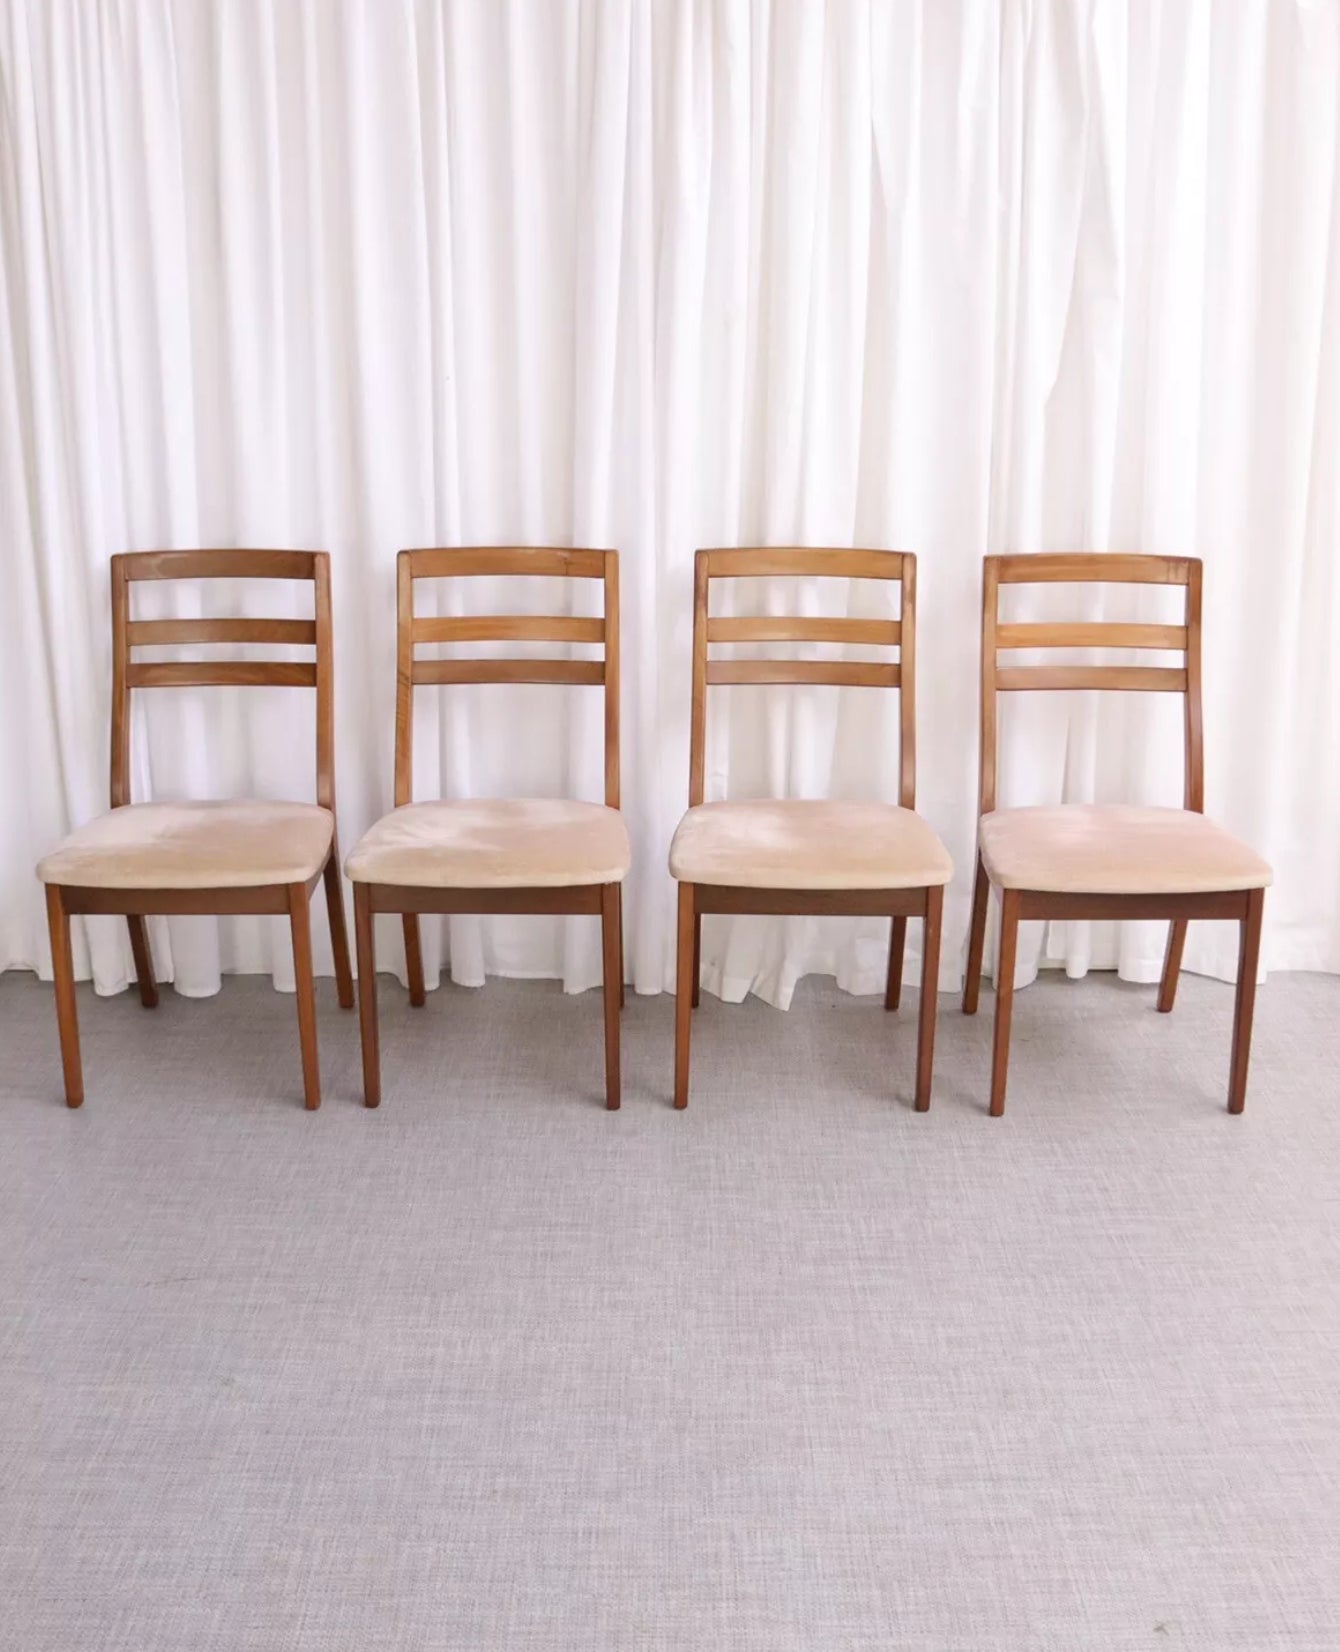 Vintage Nathan Furniture Teak Extending Dining Table And 4 Chairs Mid Century - teakyfinders